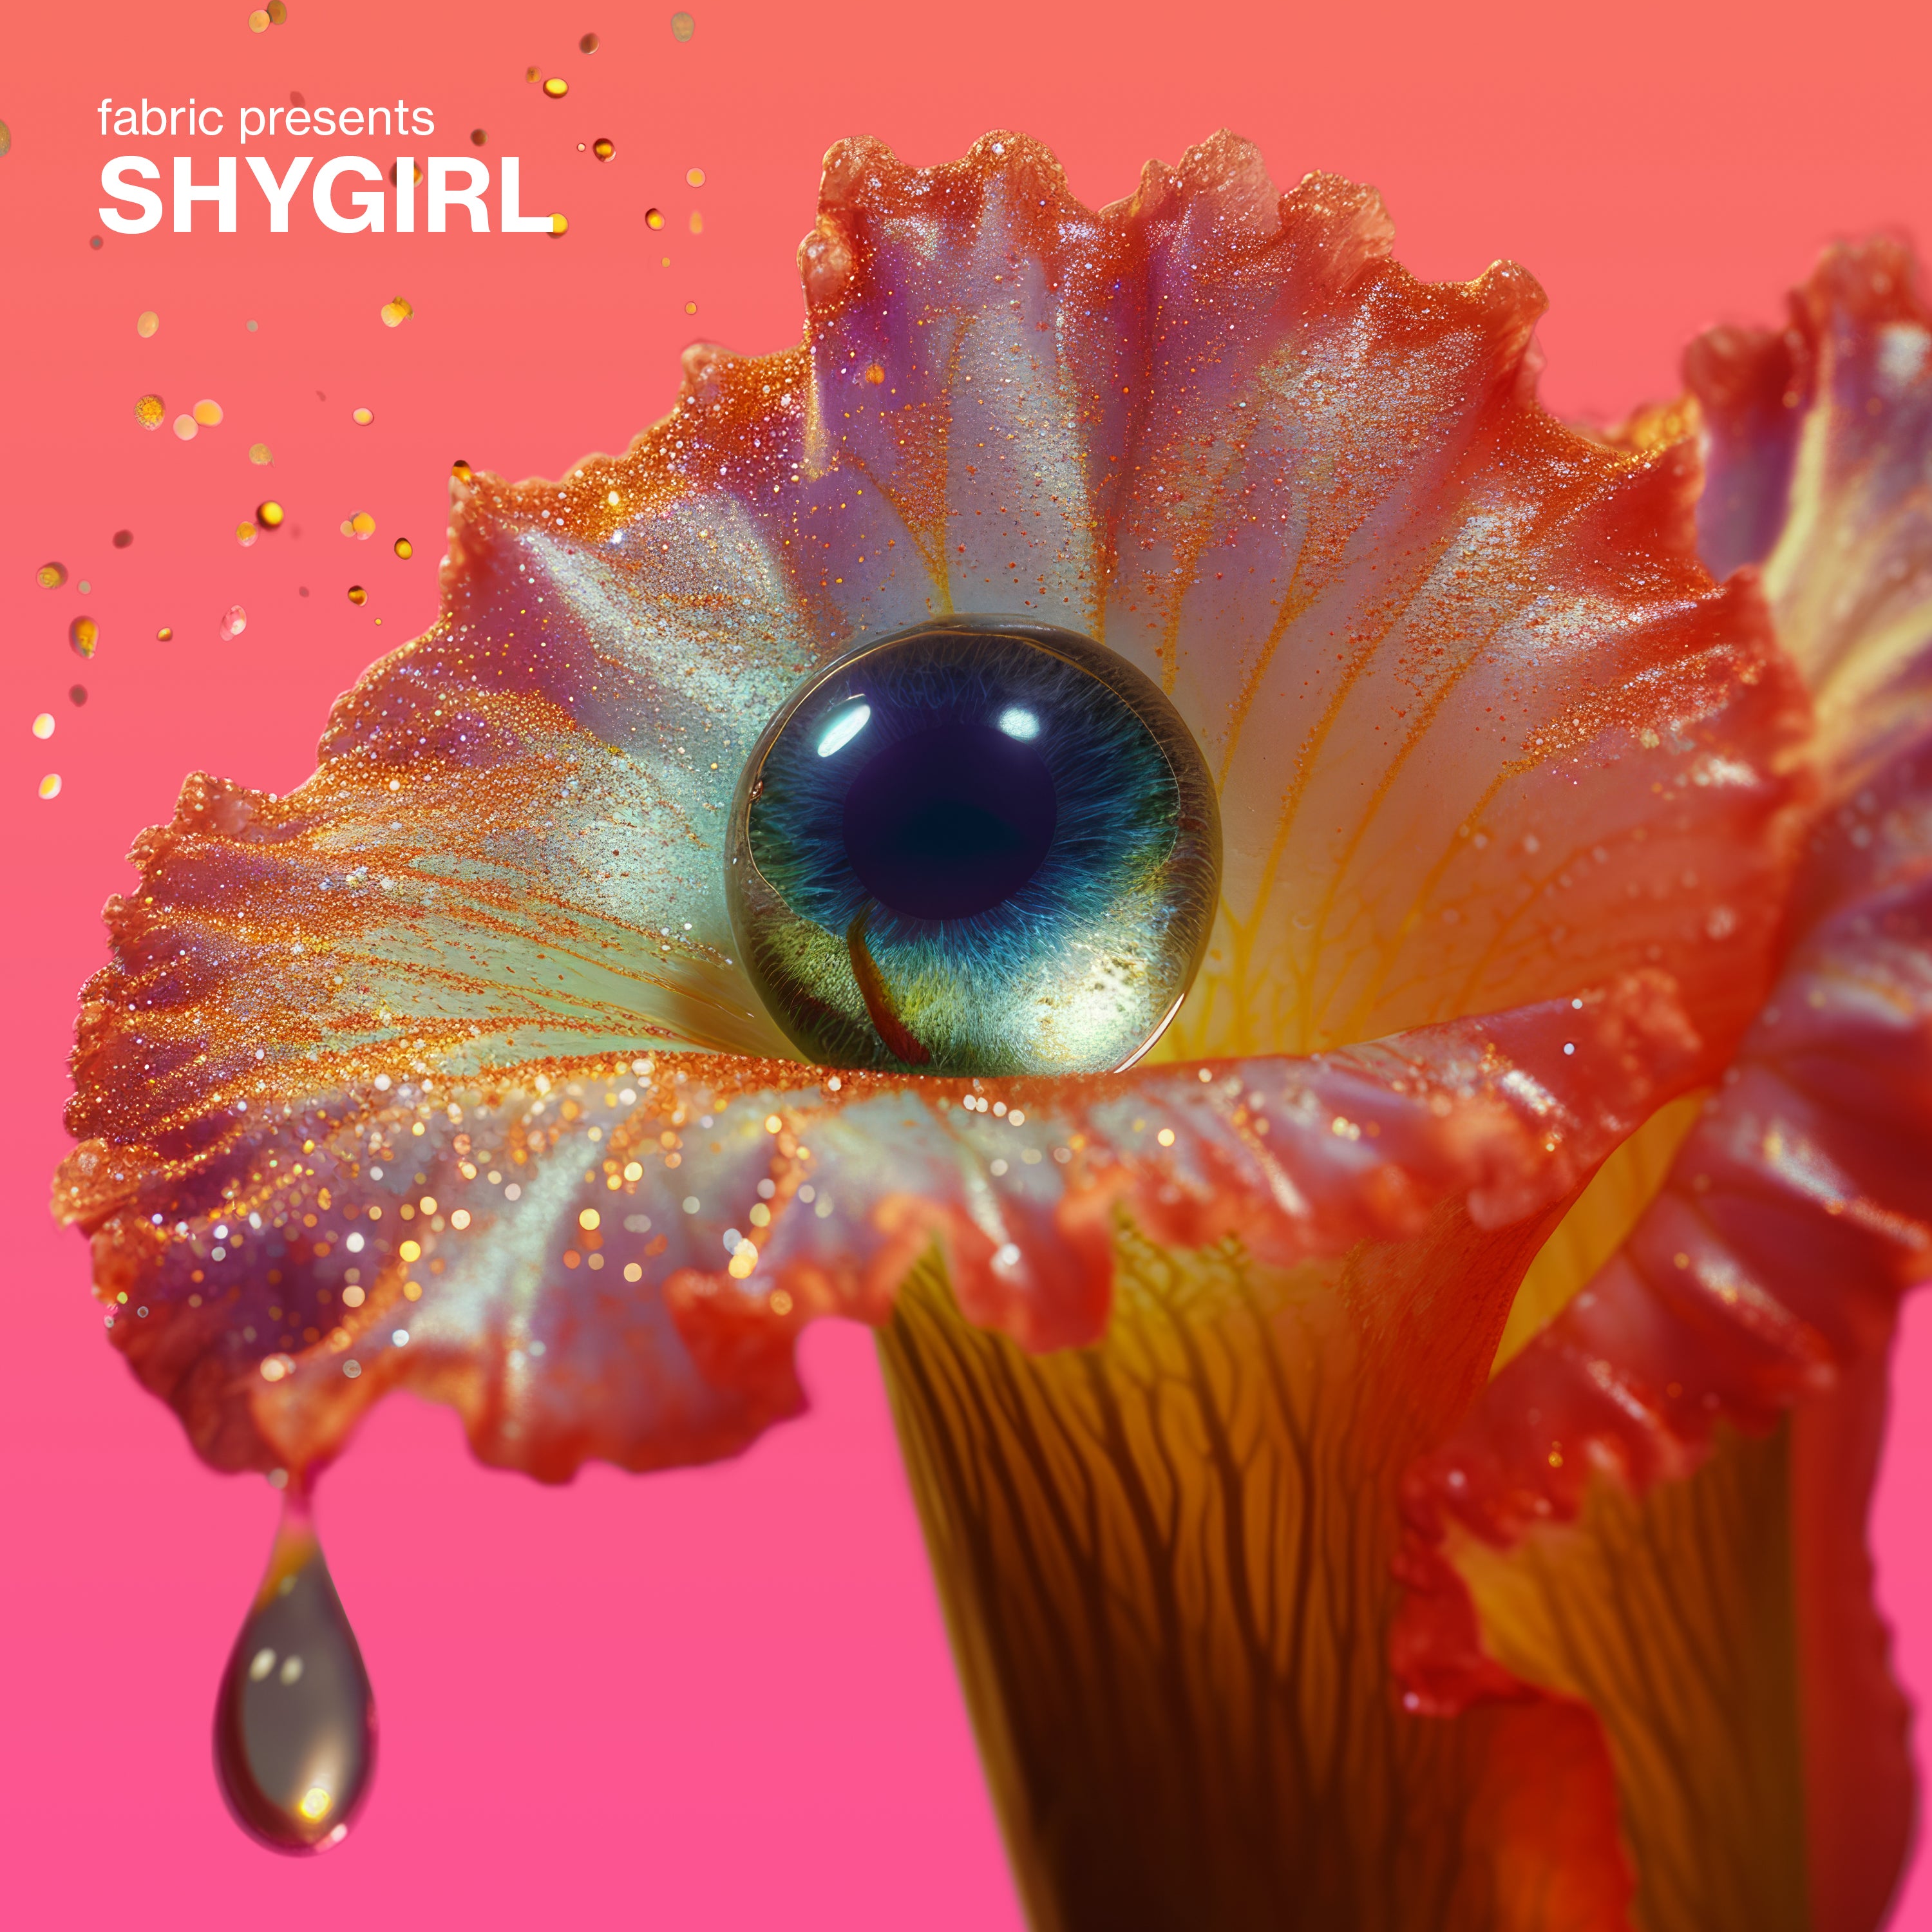 Shygirl - fabric presents Shygirl: Vinyl 2LP